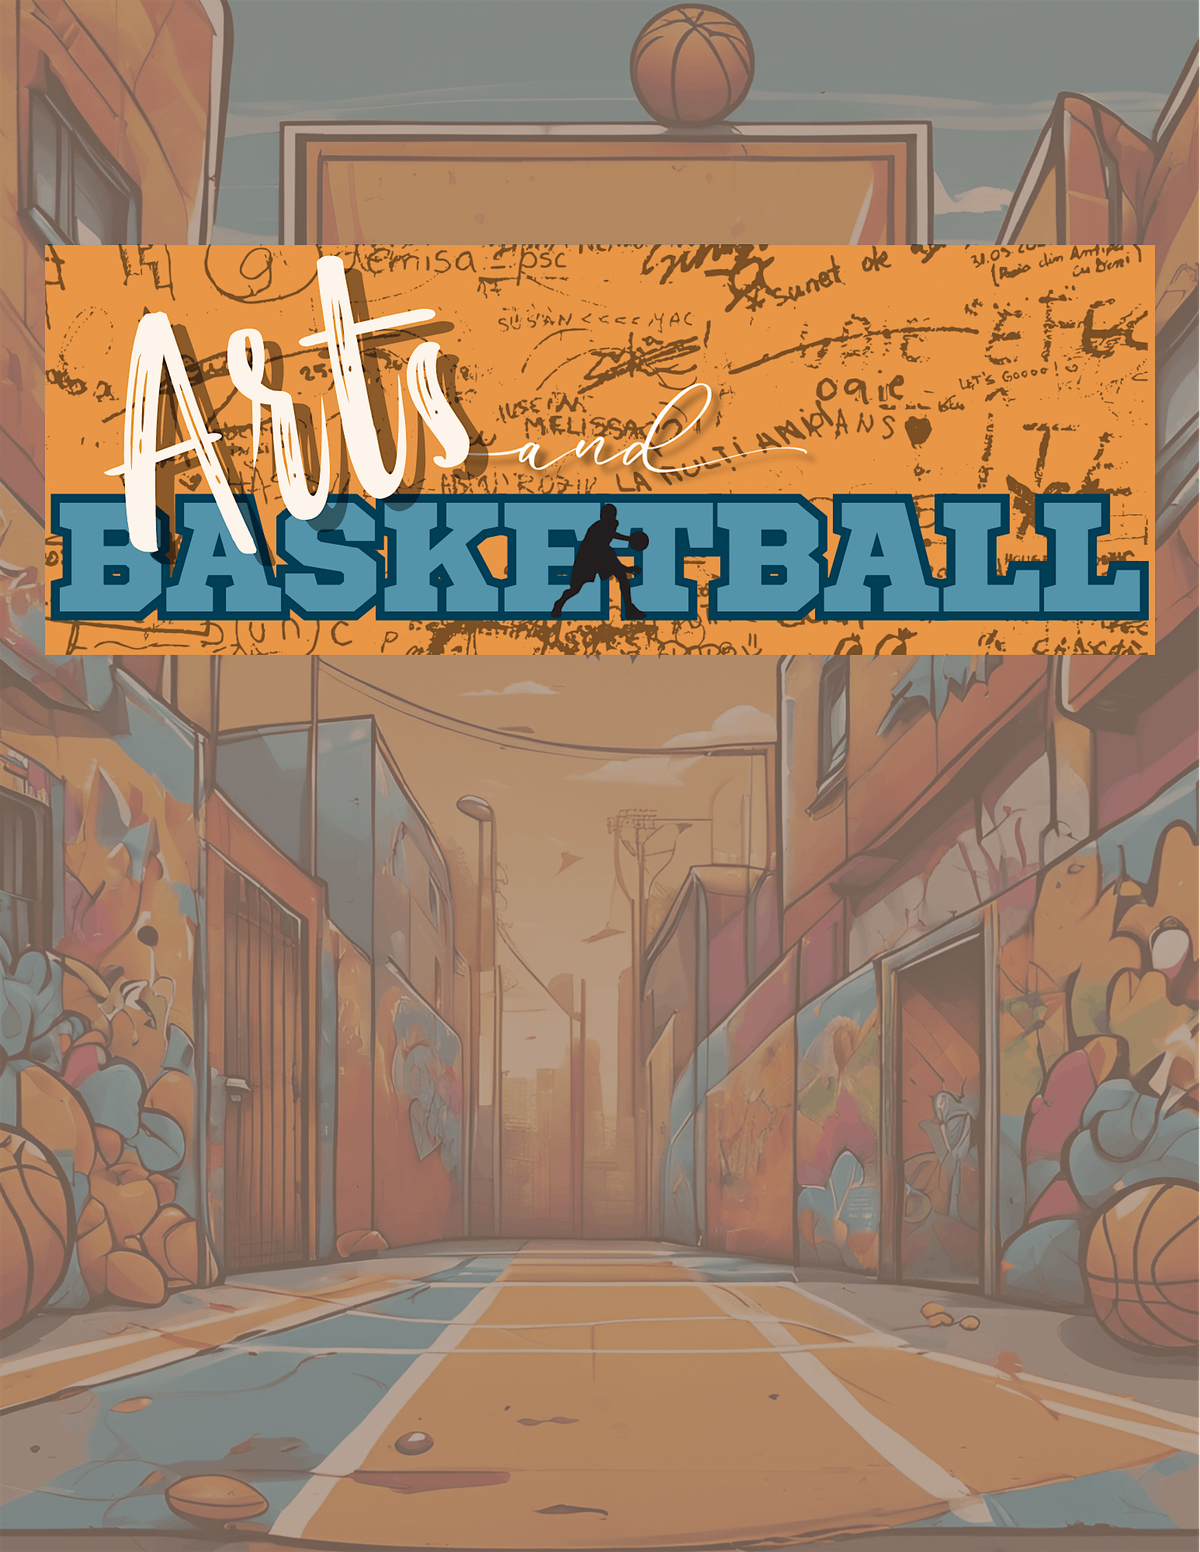 Arts & Basketball